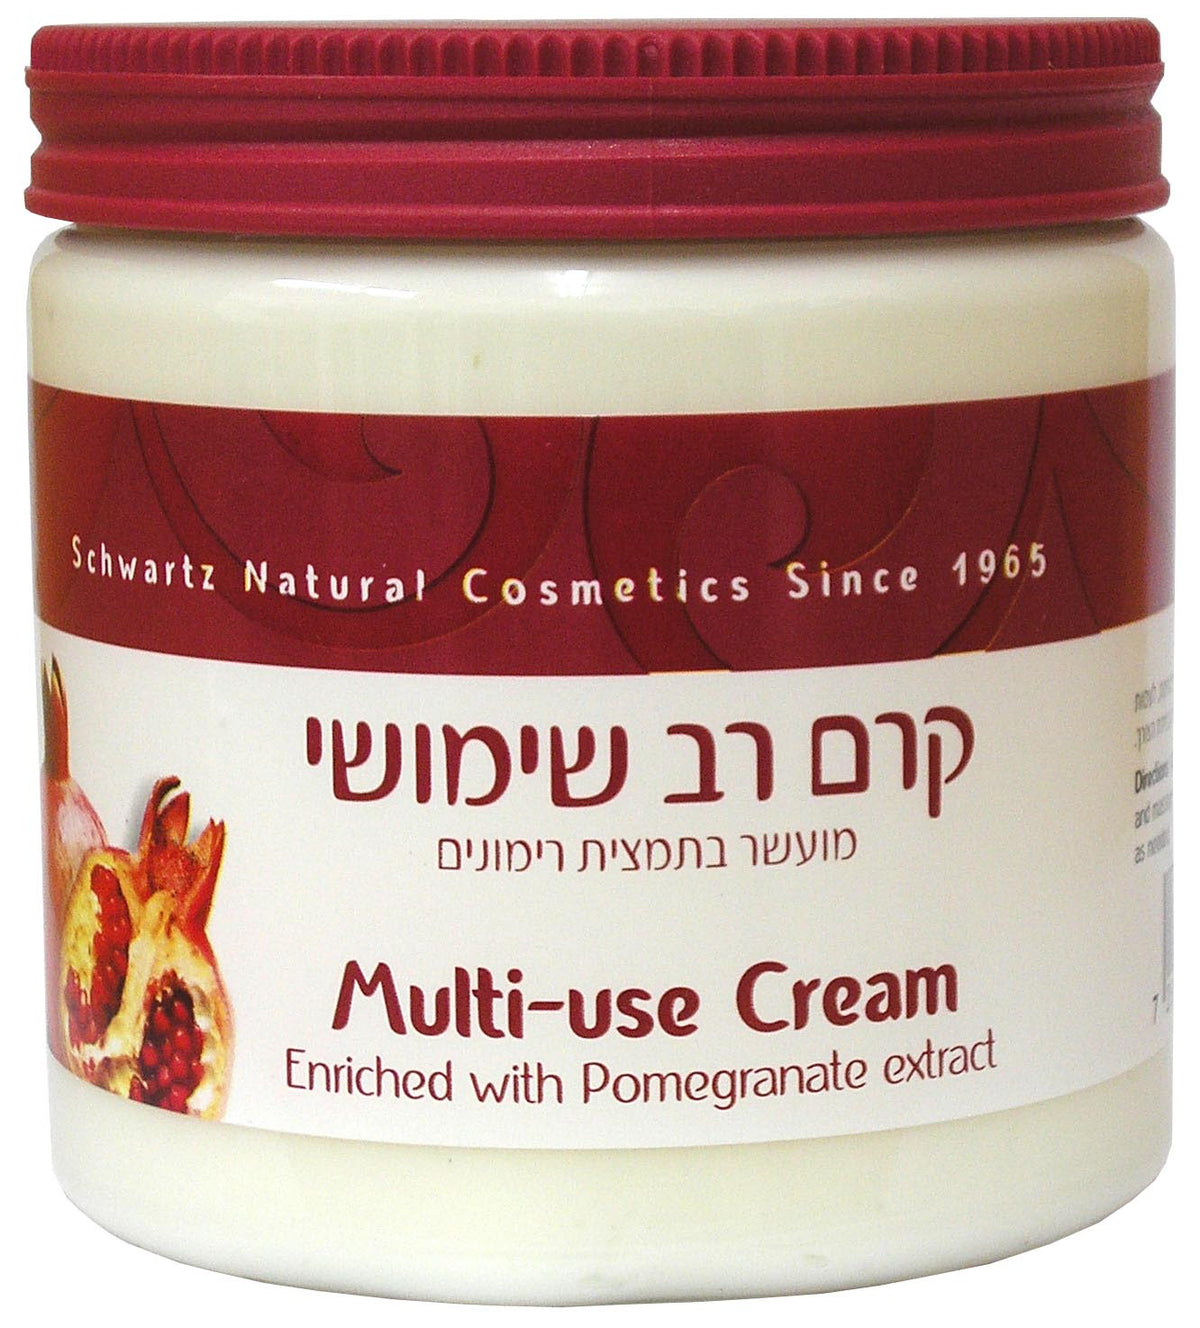 Schwartz pomegranate extract multi-purpose cream